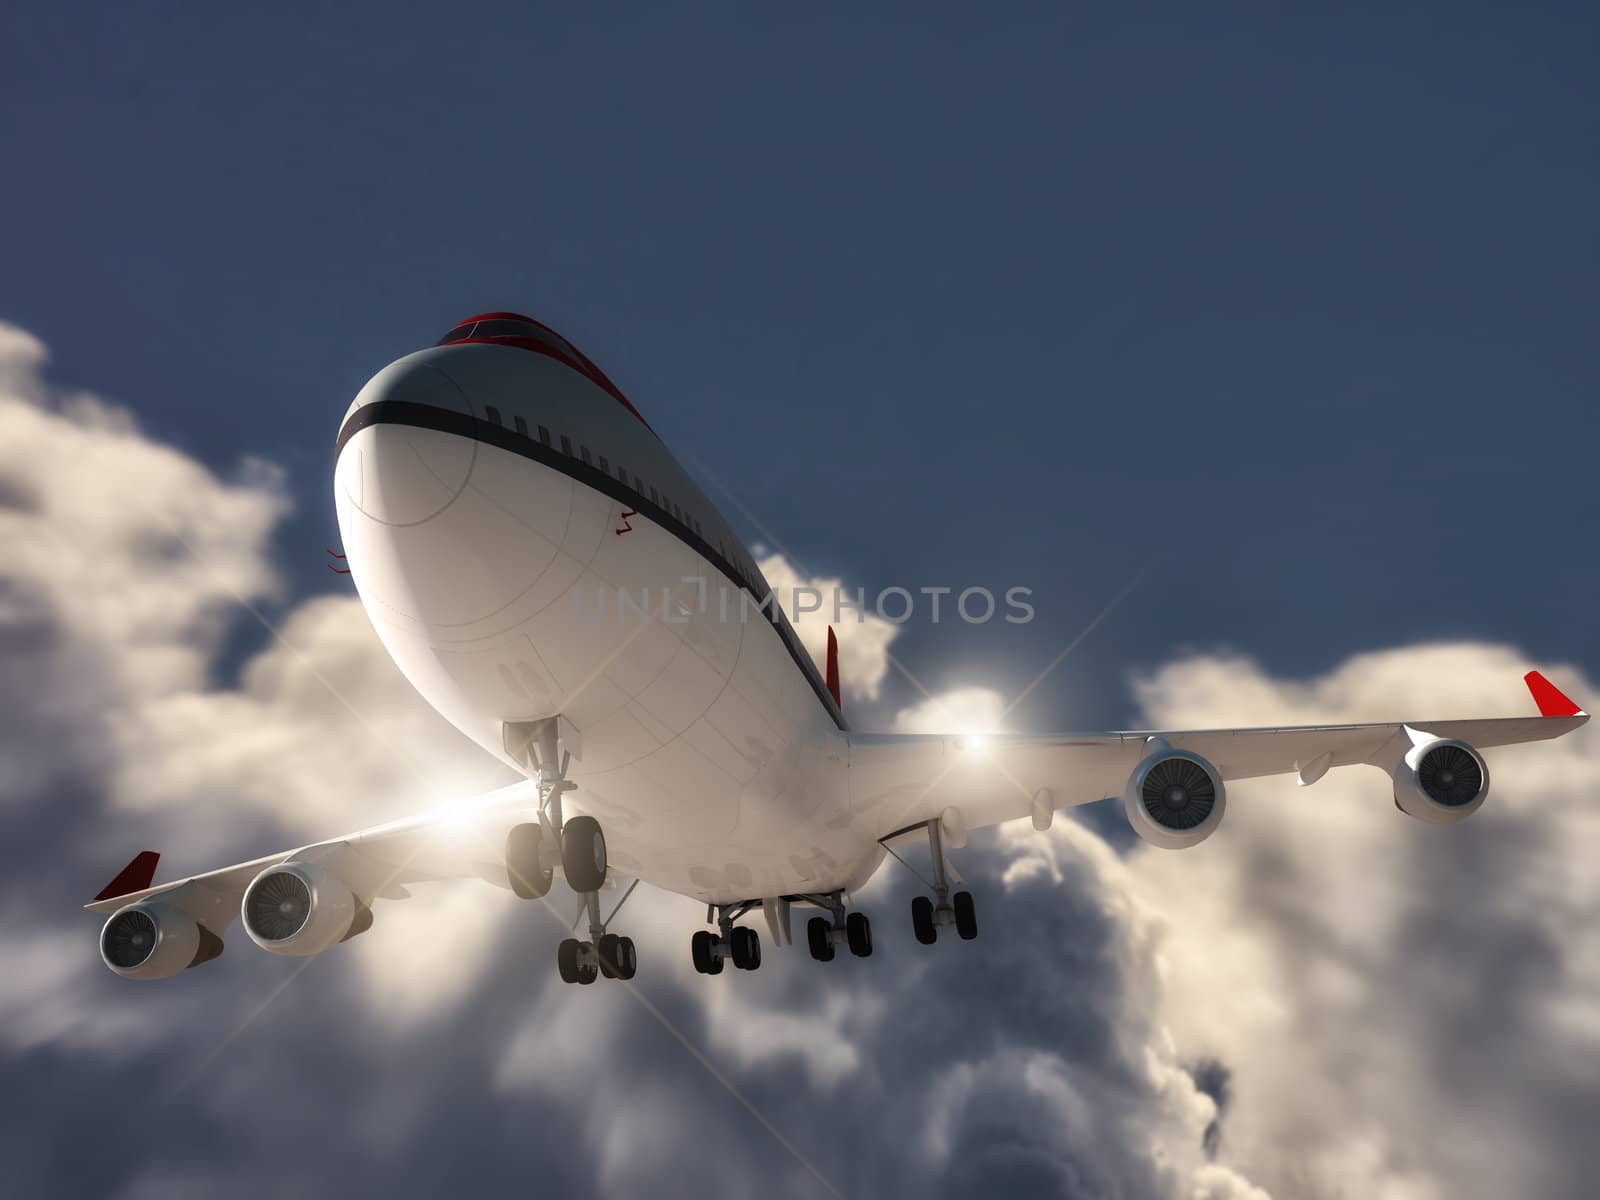 Airplane taking off by EnricoAgostoni